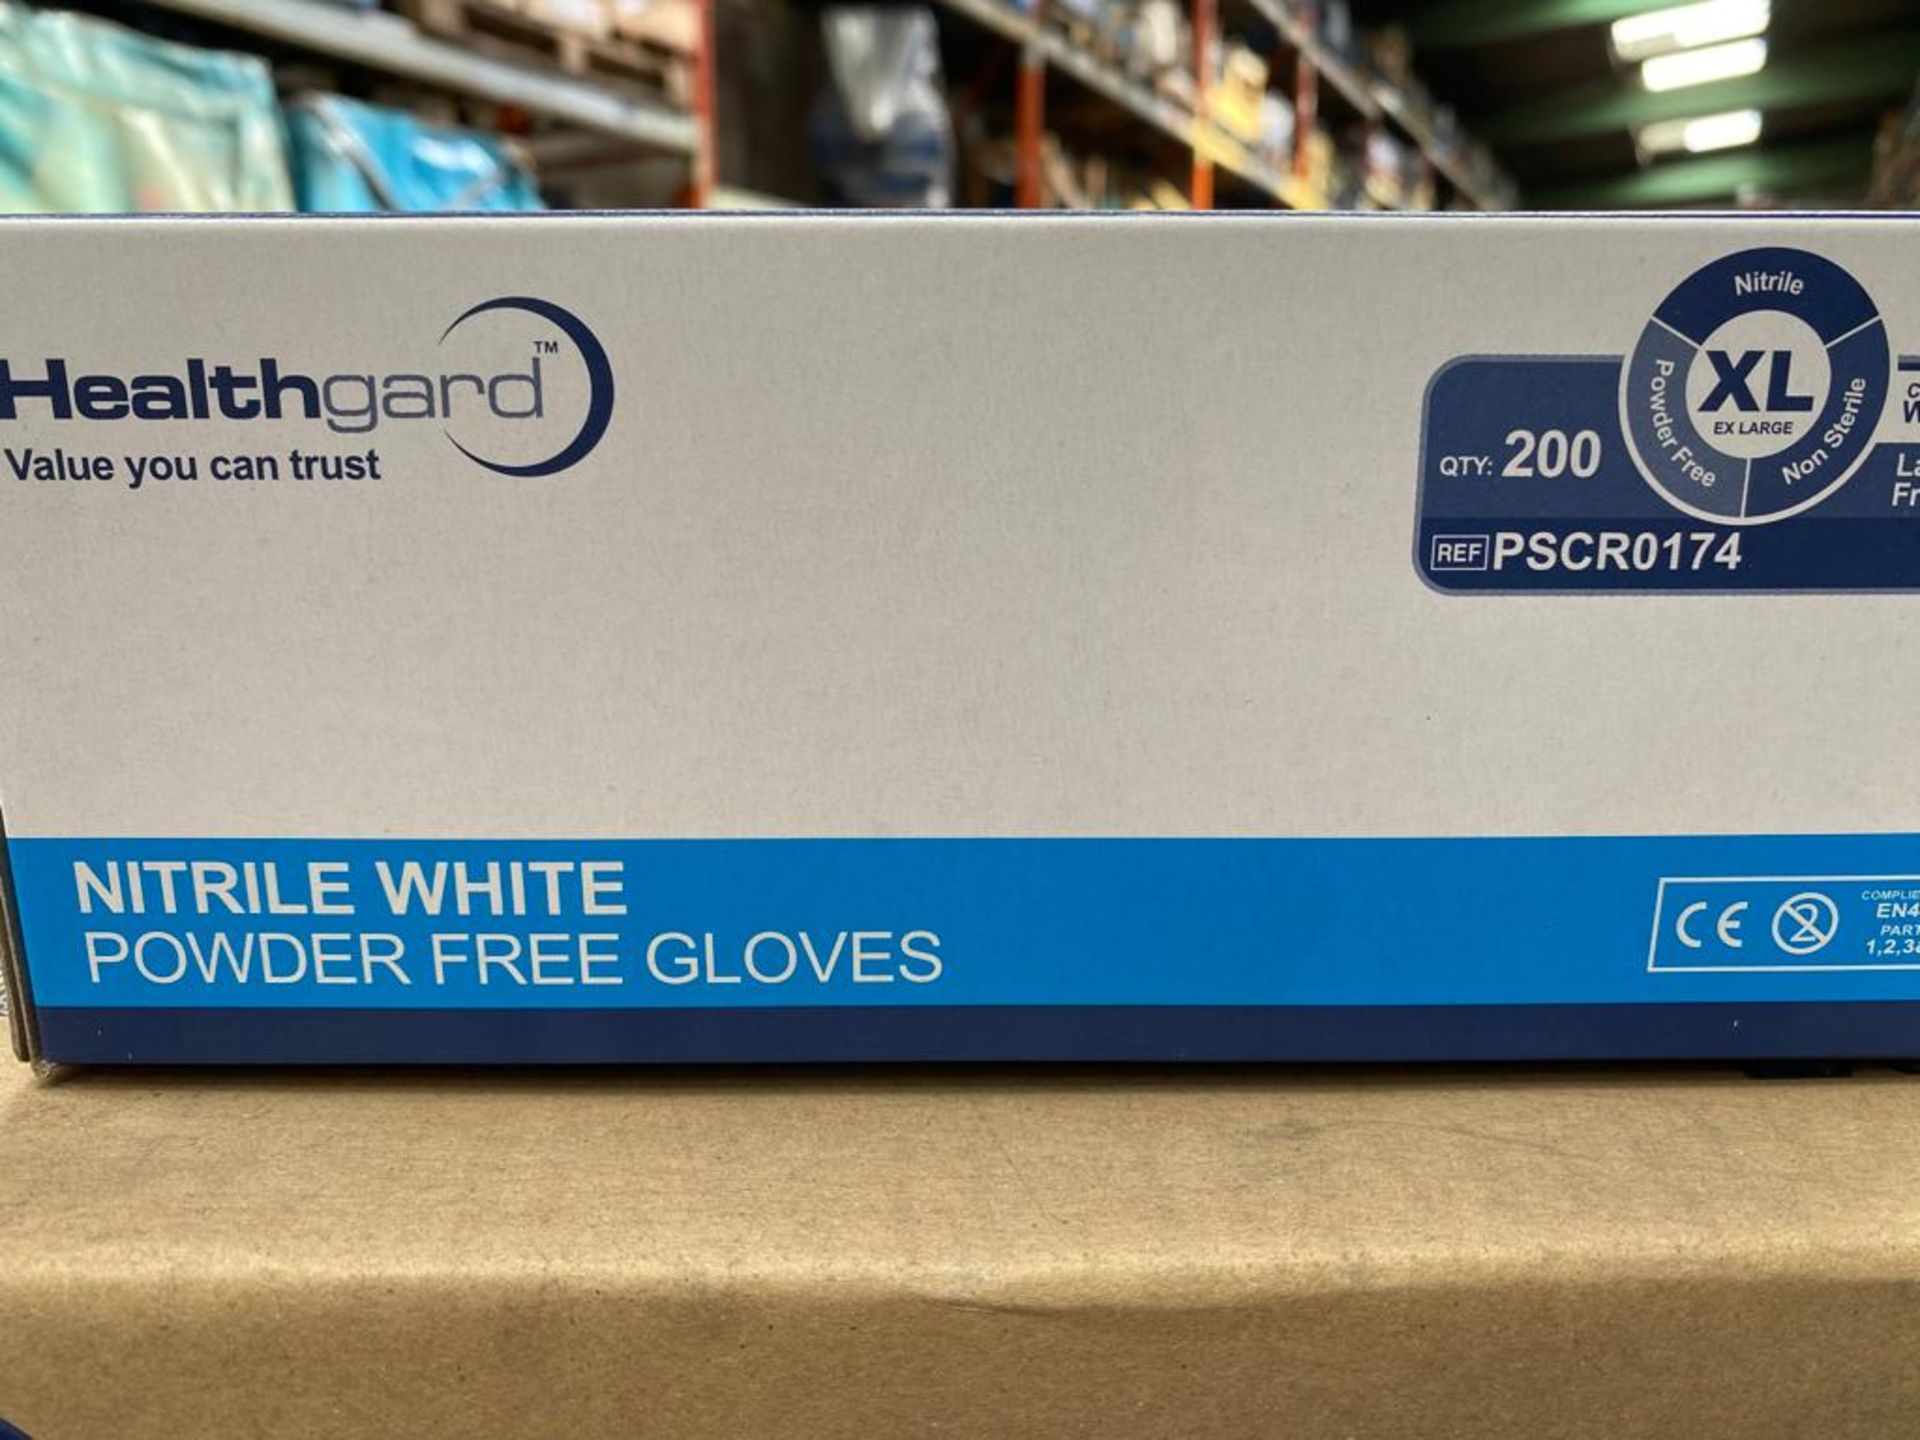 Three Boxes of Healthgard XL Nitrile White Powder Free Gloves, ten packs per box, 200 gloves per - Bild 2 aus 2